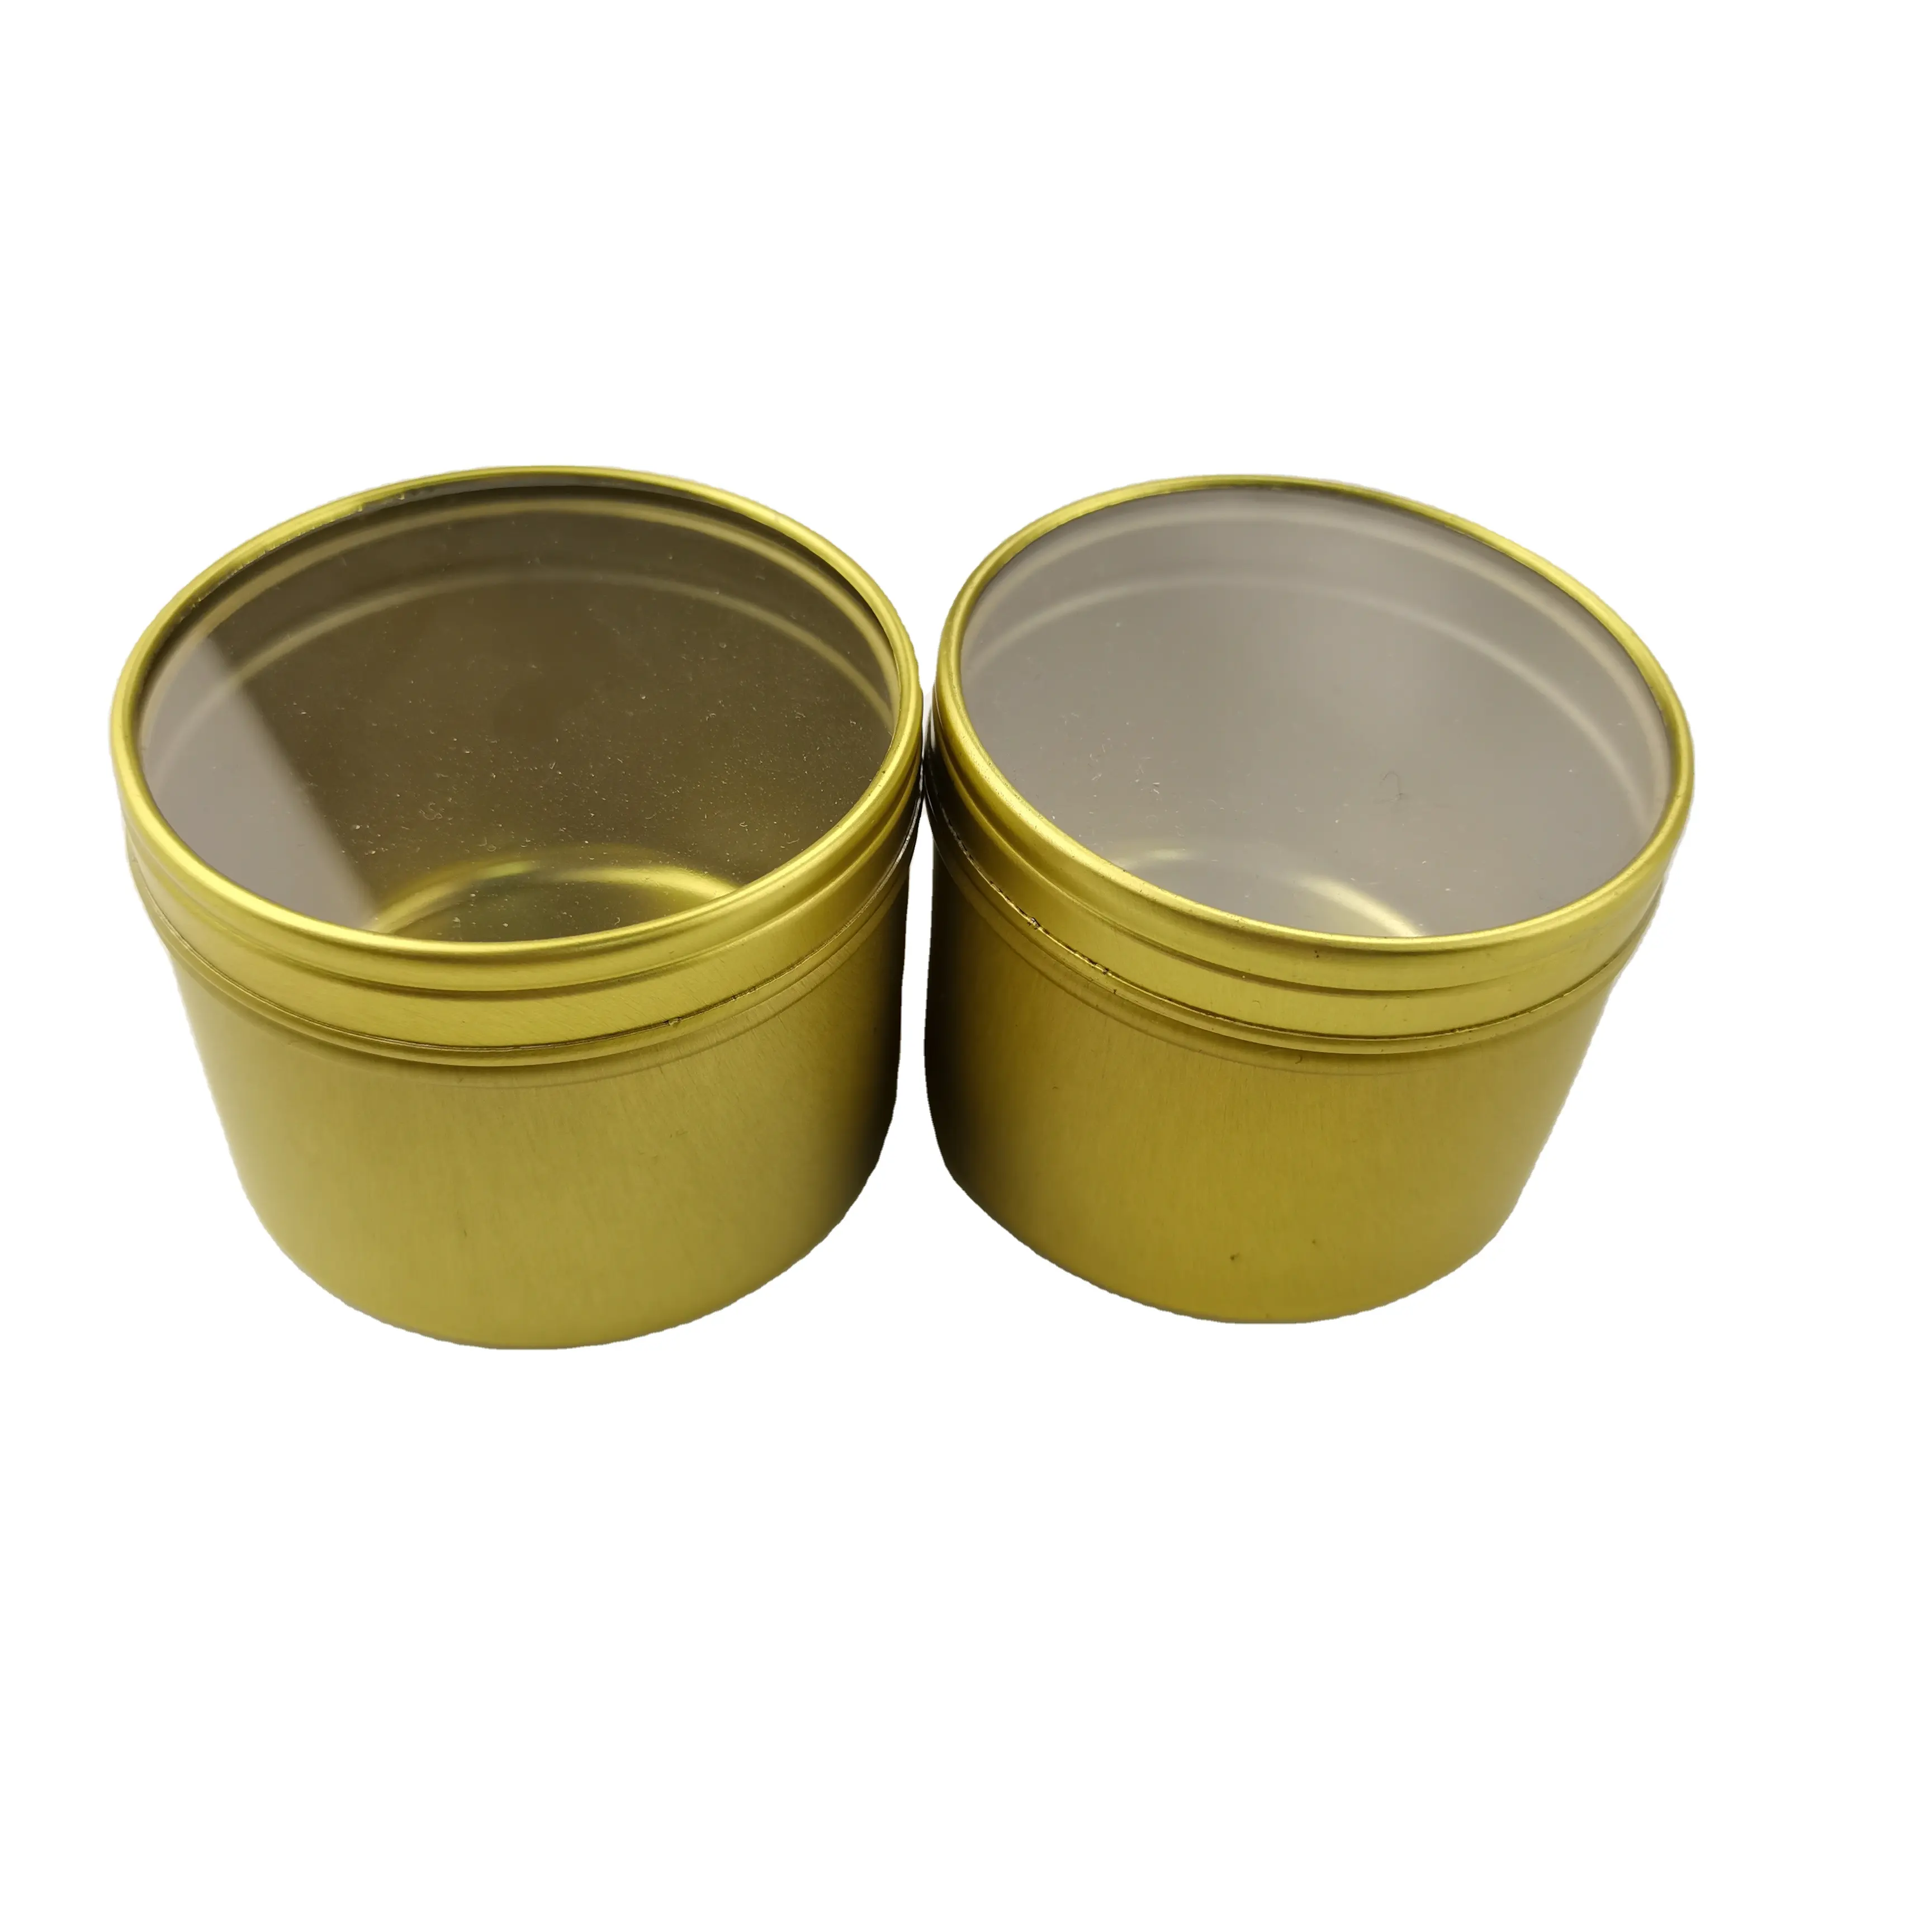 Custom Indian redonda chá lata caixa com janela clara cor dourada caddy indiano UK chá latas fabricante